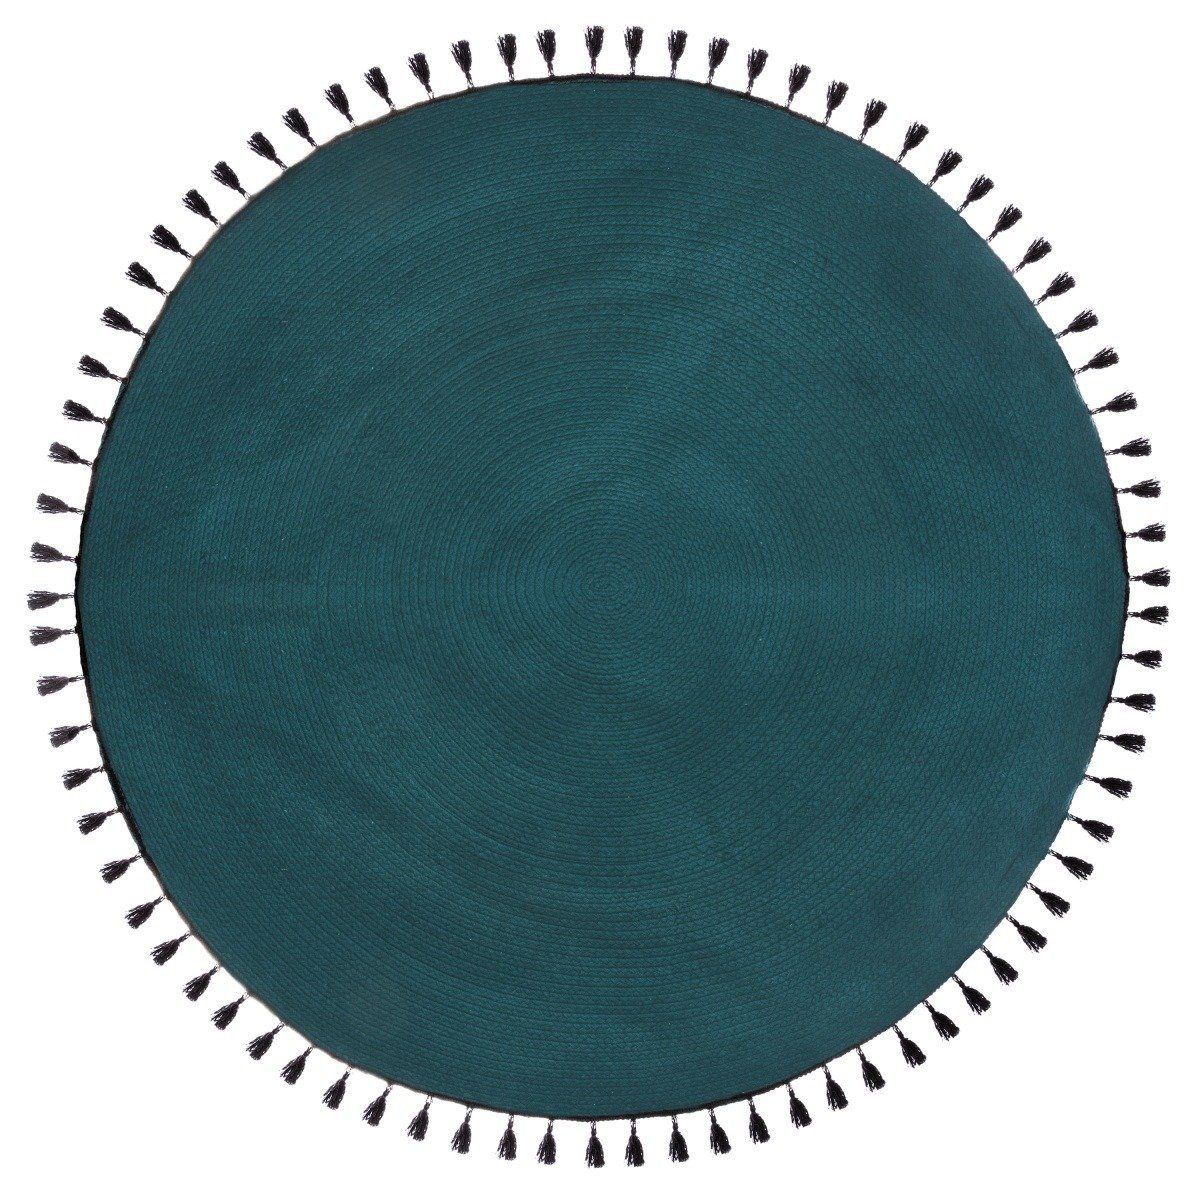 Atmosphera Kulatý koberec s třásněmi, bavlněný, O 120 cm, modrá barva - EMAKO.CZ s.r.o.